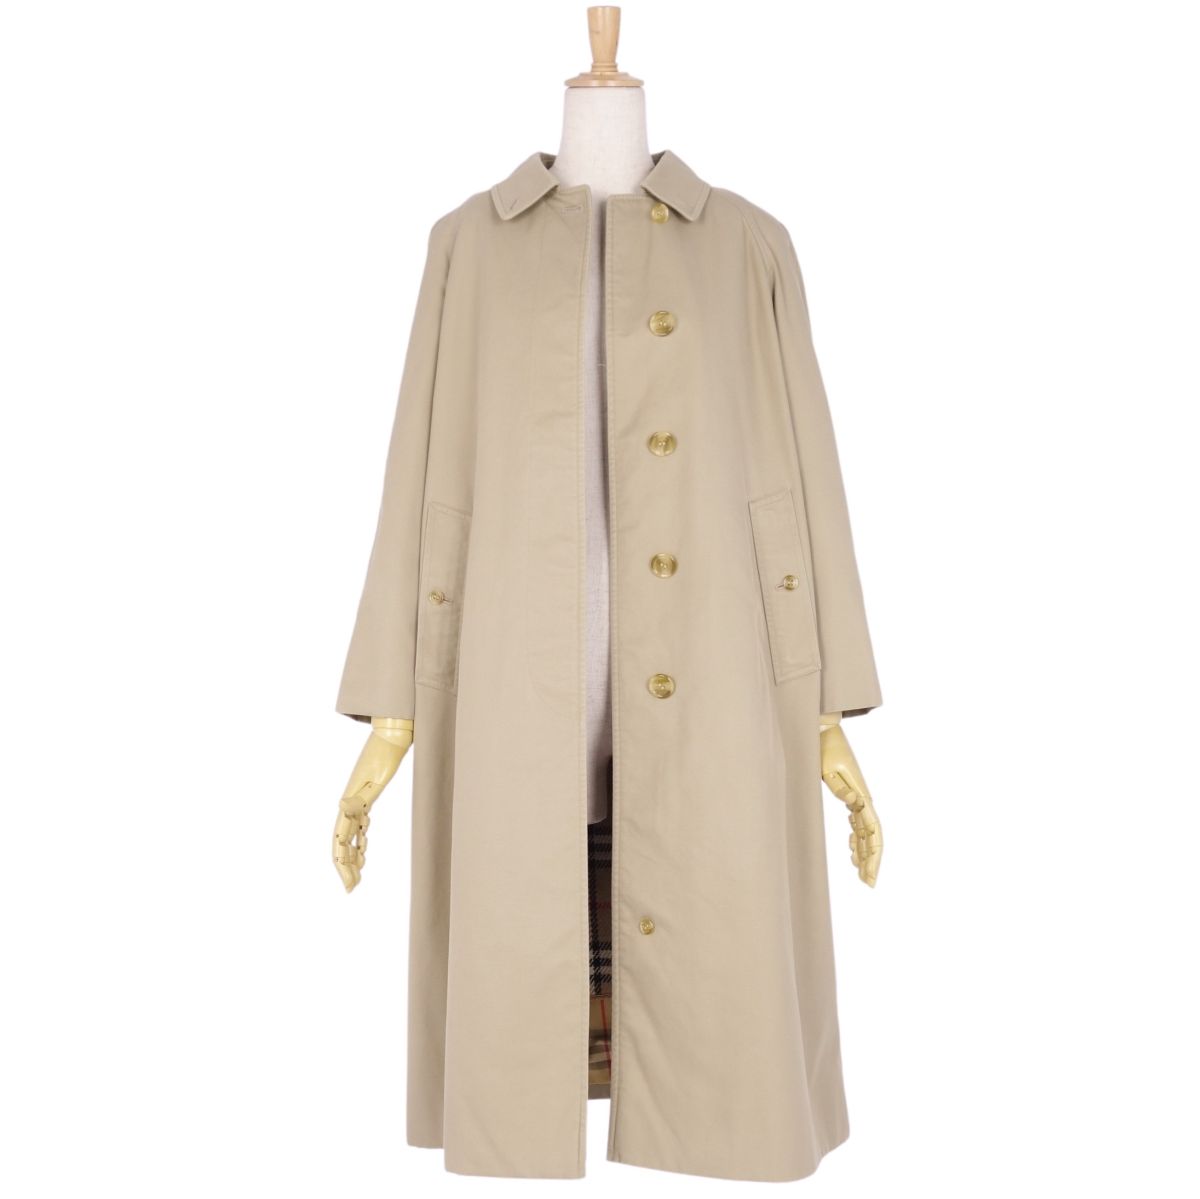 Vint Burberry s Coat Stainless Colour Coat Balmacorn Coat Back Check Liner   7AB2 (S equivalent) Beige - FODMEST